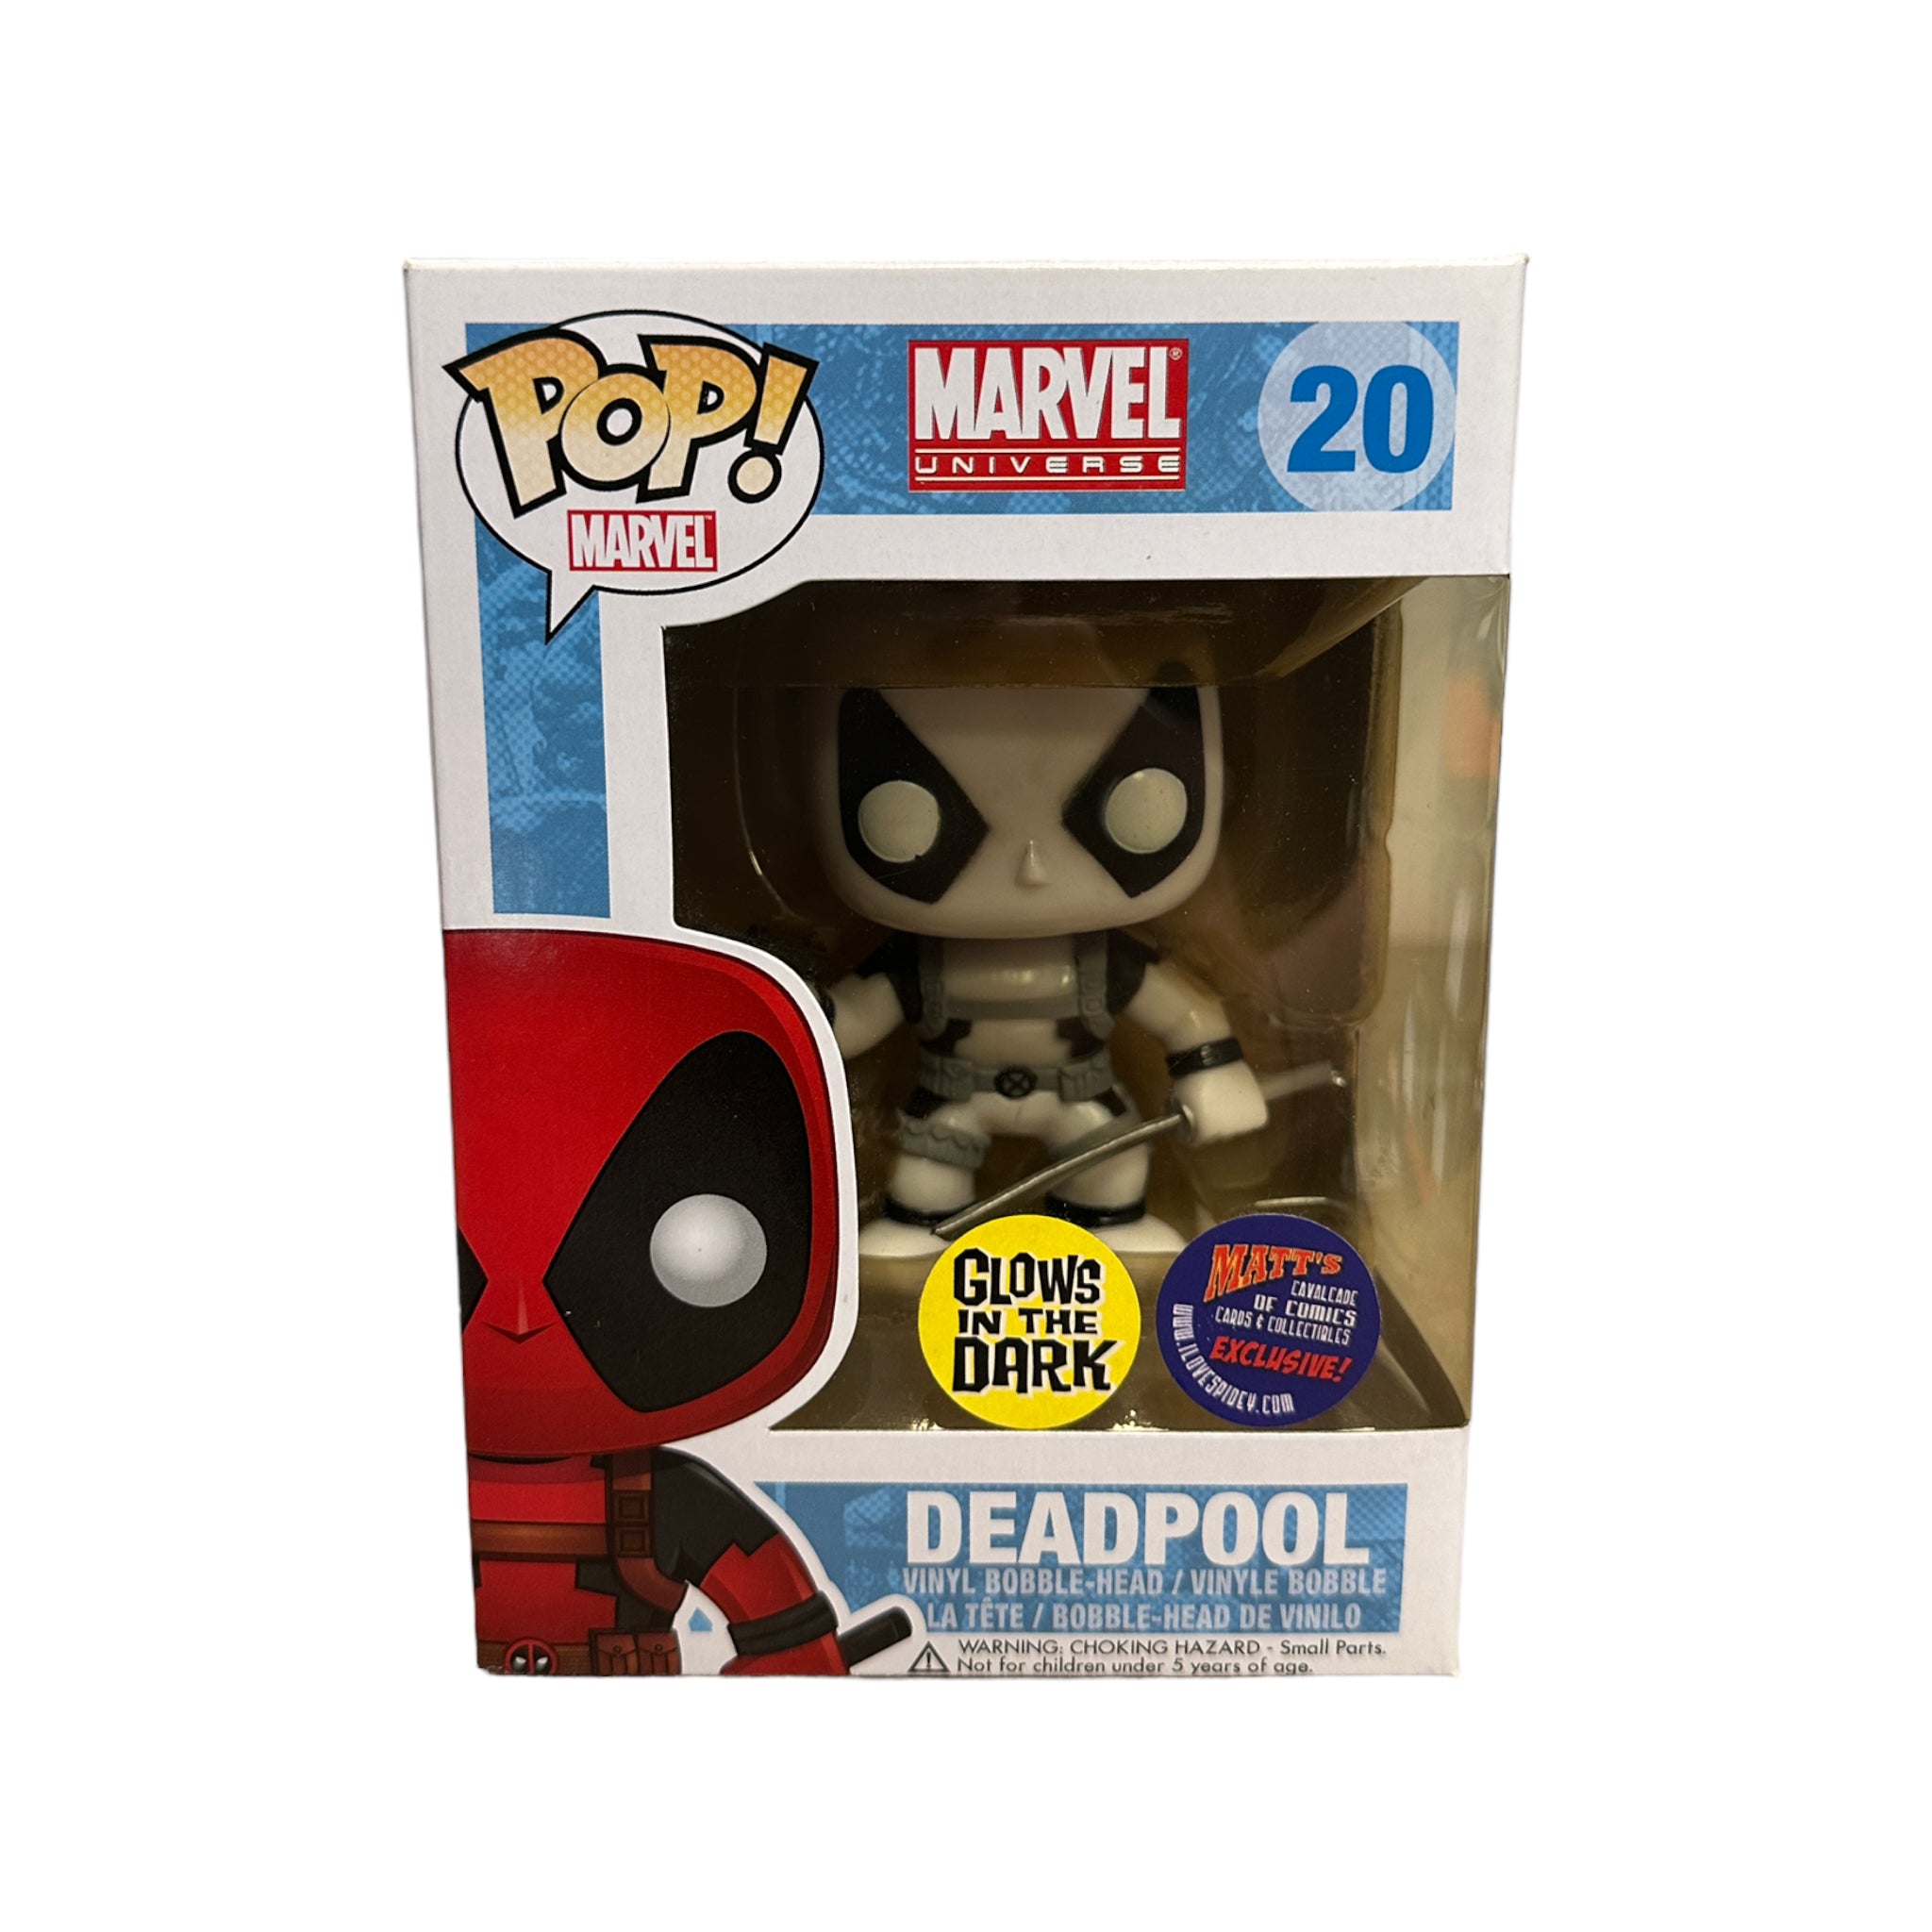 Deadpool #20 (Black and White Glows in the Dark) Funko Pop! - Marvel Universe - Matt's Cavalcade of Comics, Cards & Collectibles Exclusive - Condition 6/10